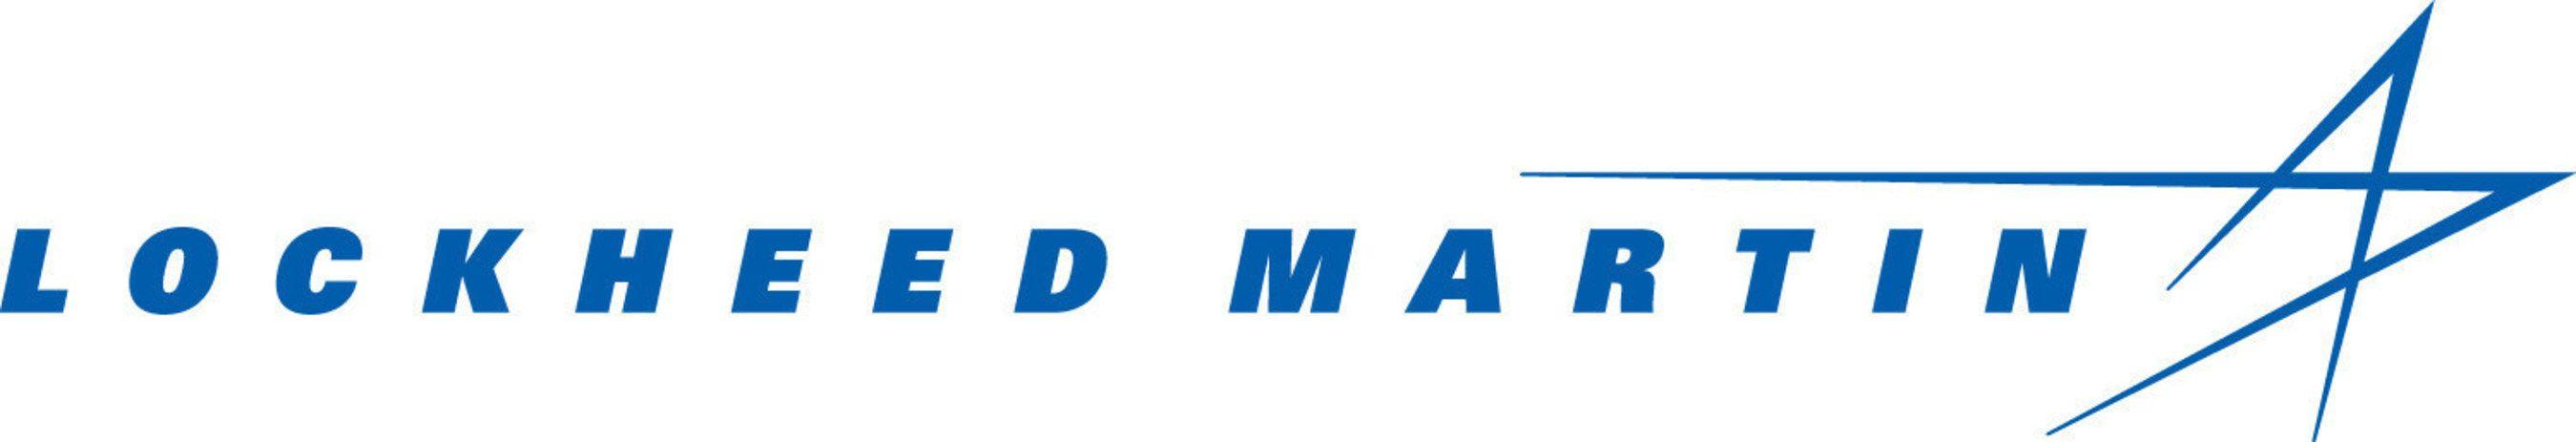 Lockheed Martin Aerospace Logo - QRA Corp Begins Lockheed Martin Aeronautics Project to Deliver a New